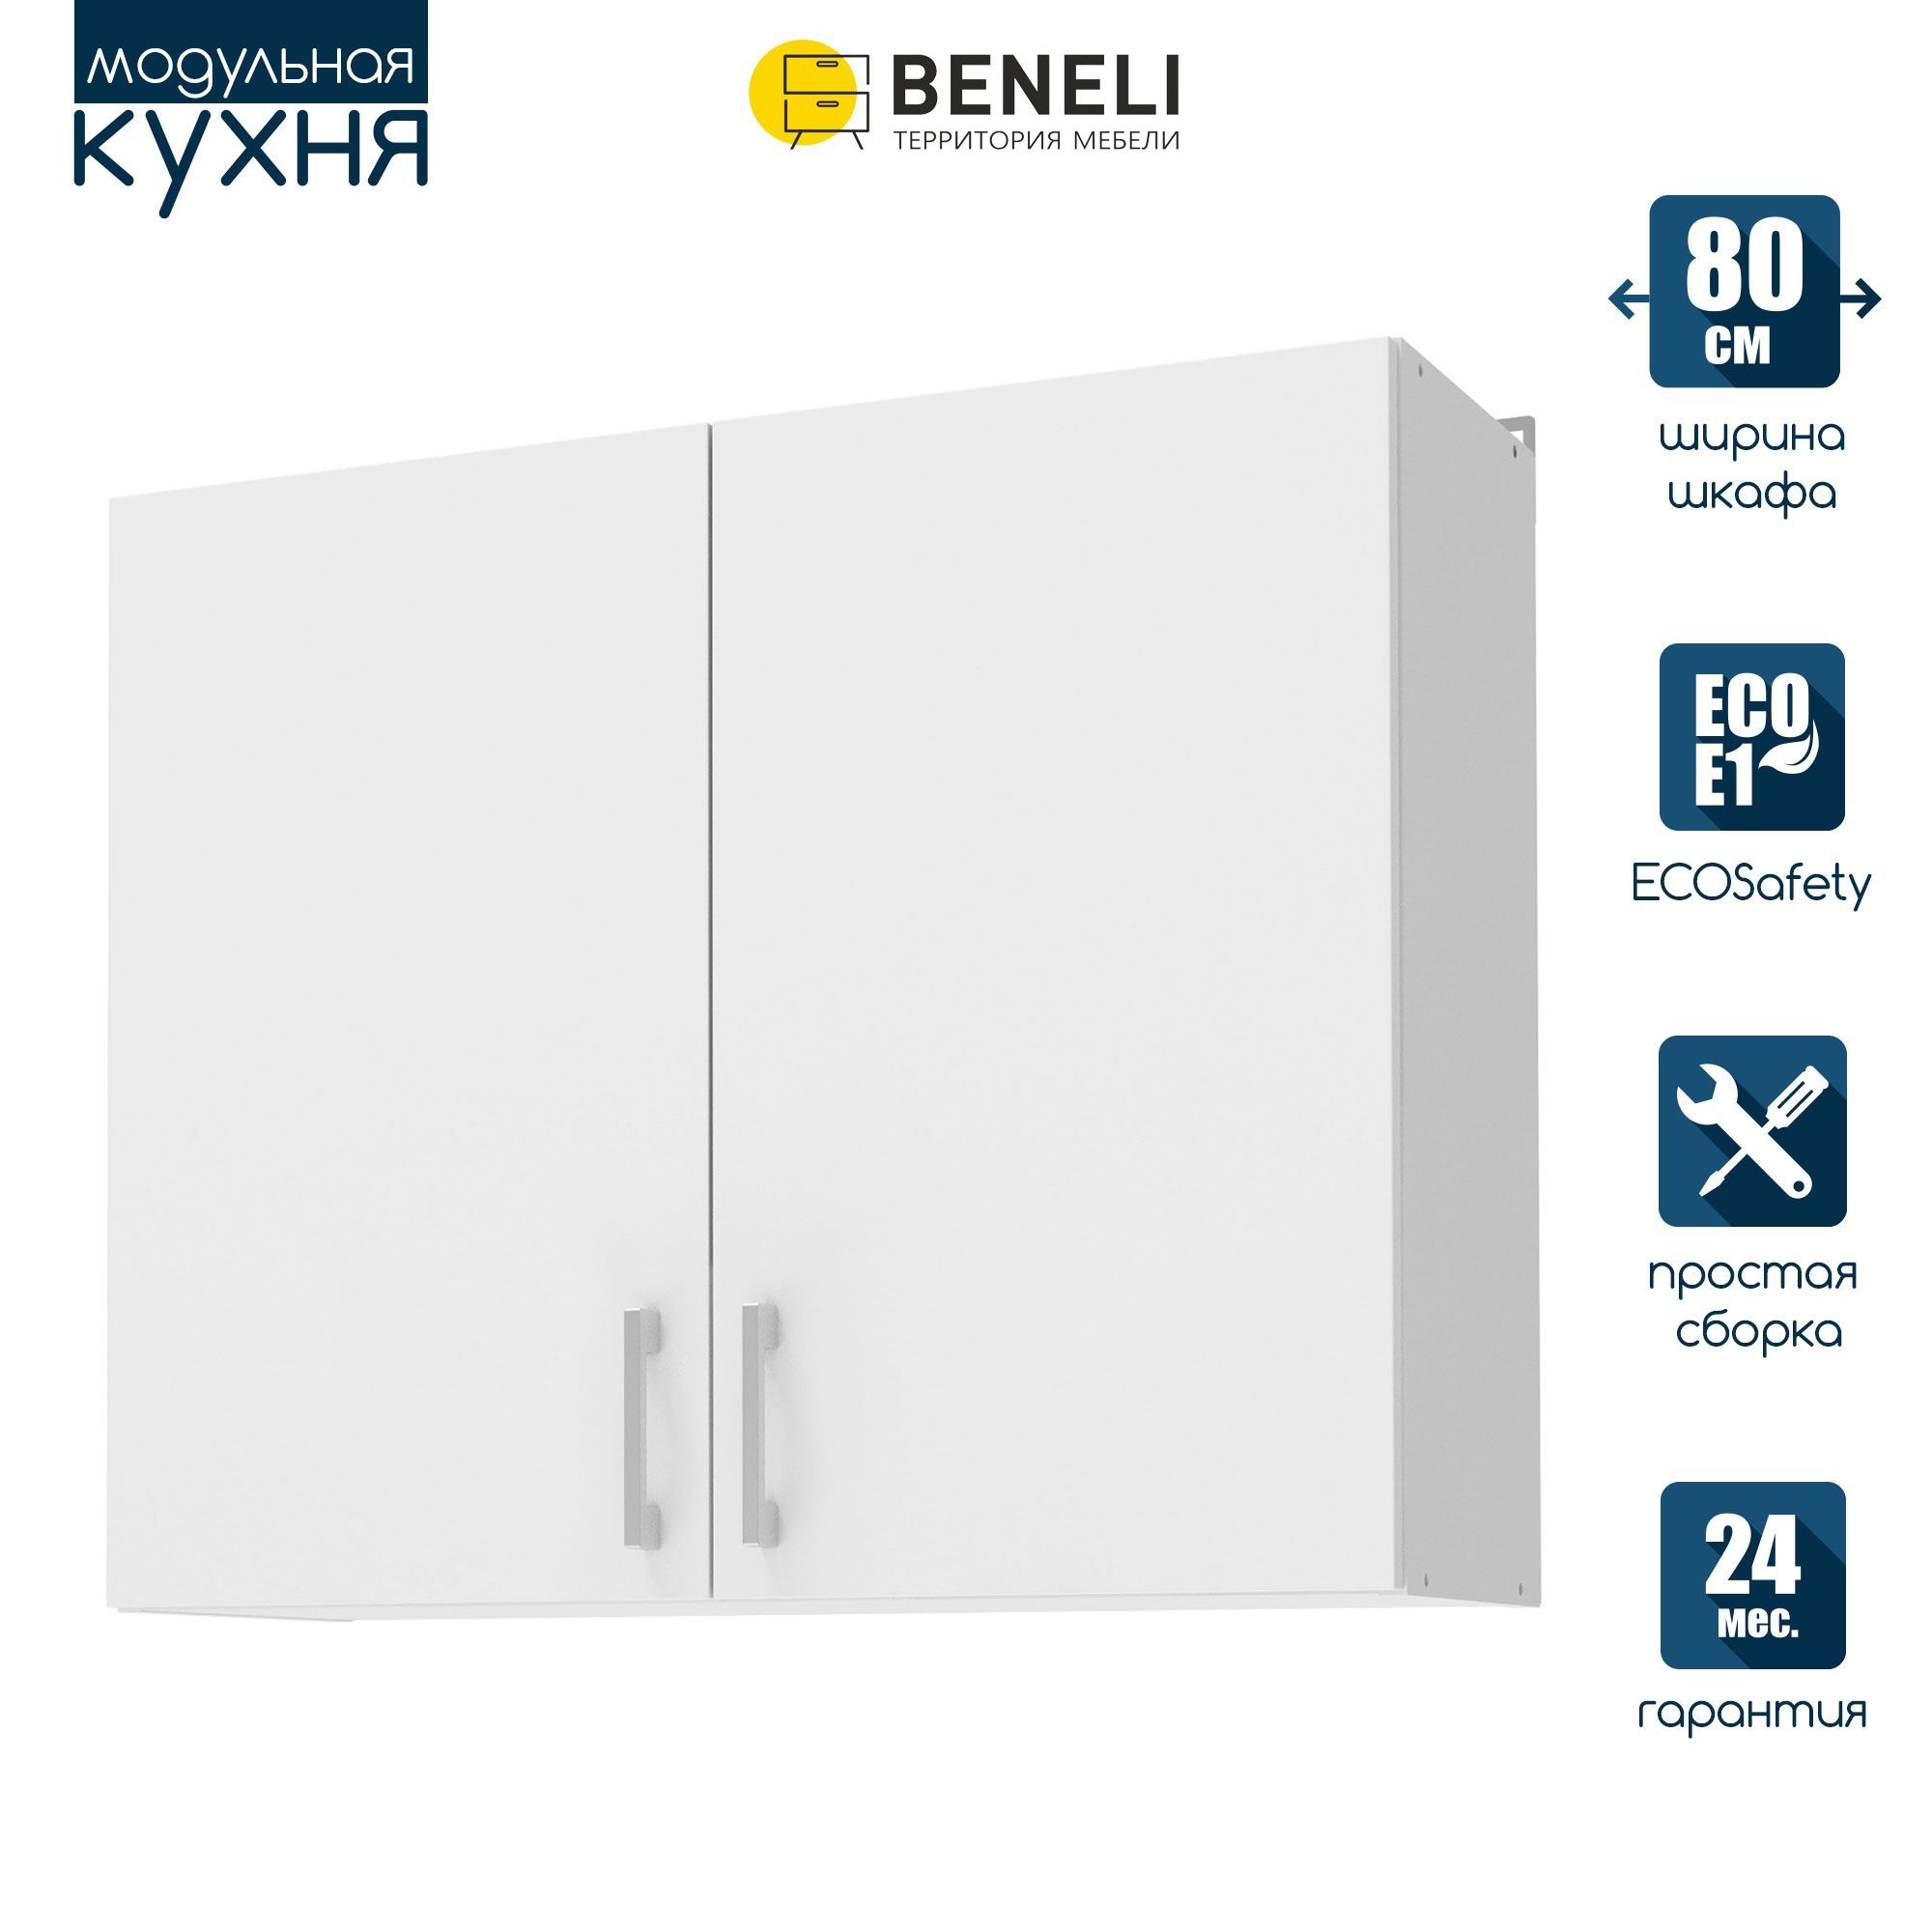 Кухонный модуль навесной шкаф Beneli УЮТ, Белый, 80х31,7х72см - характеристики и описание на Мегамаркет